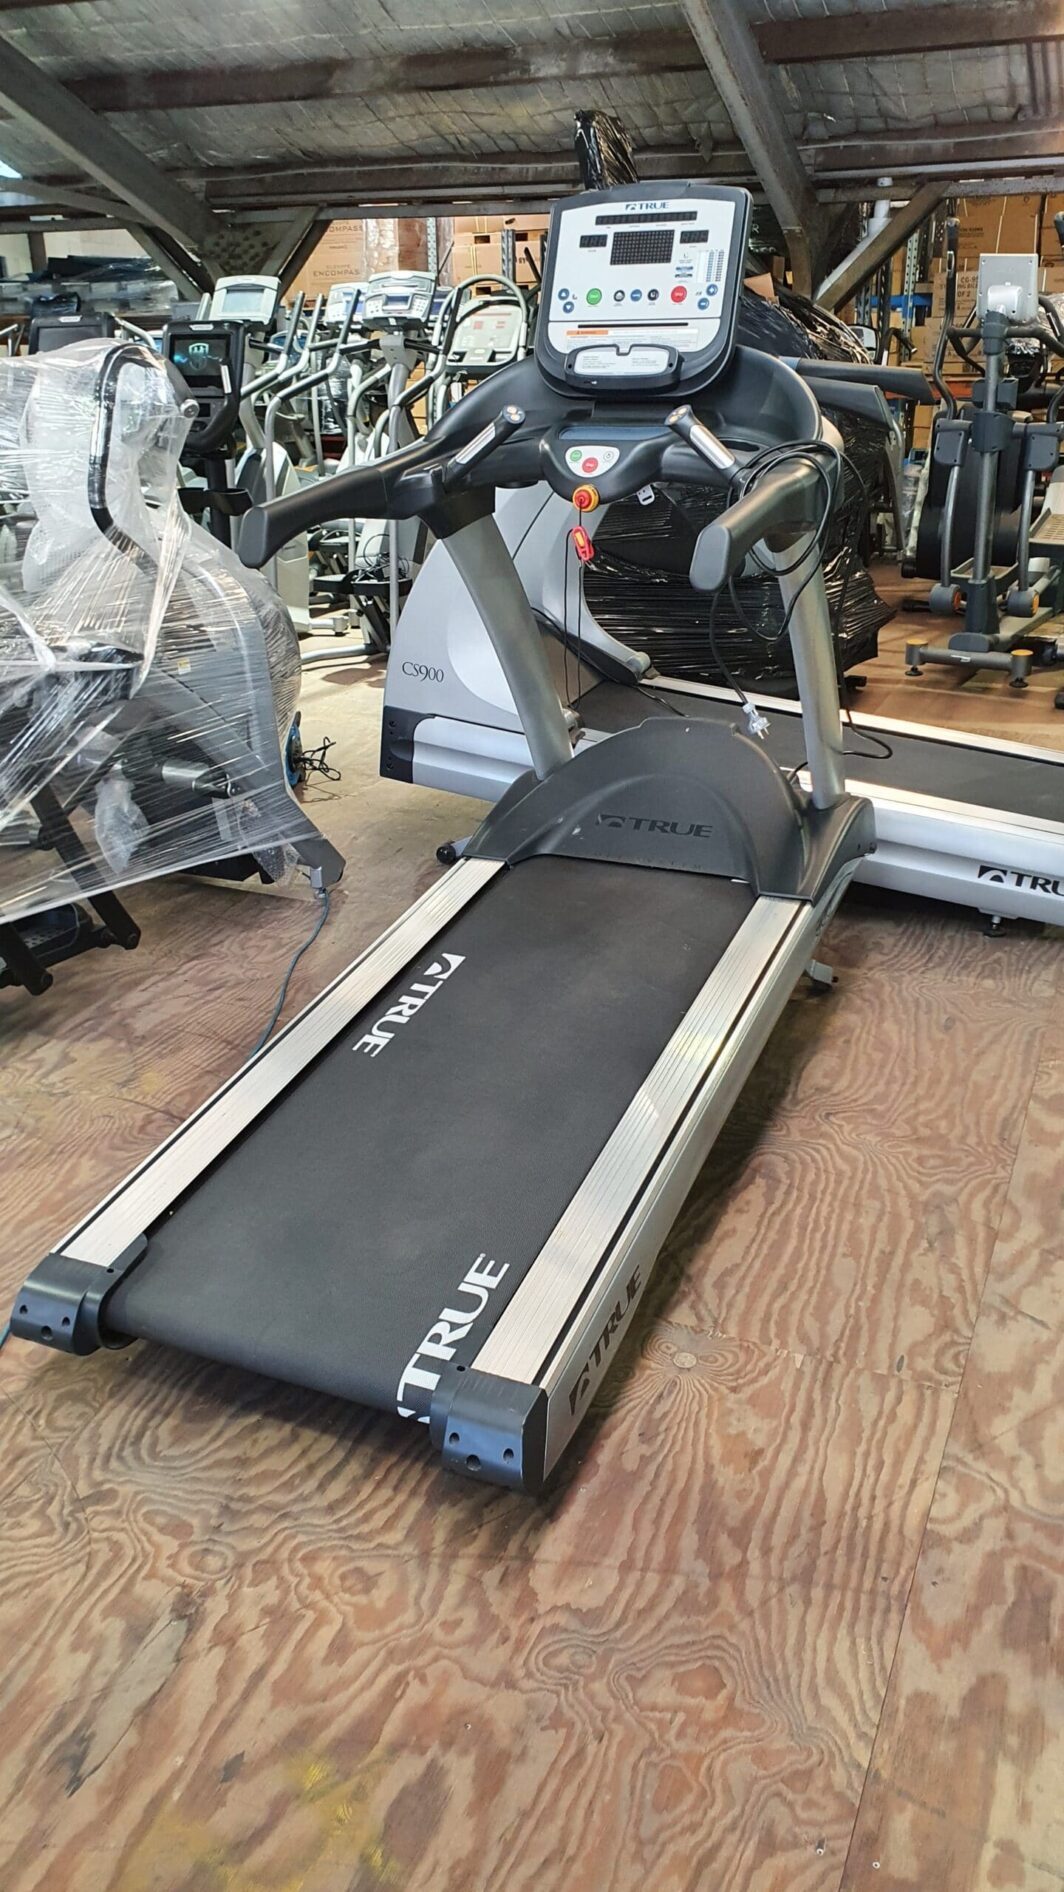 True Fitness 900 Treadmill commercial gym equipment